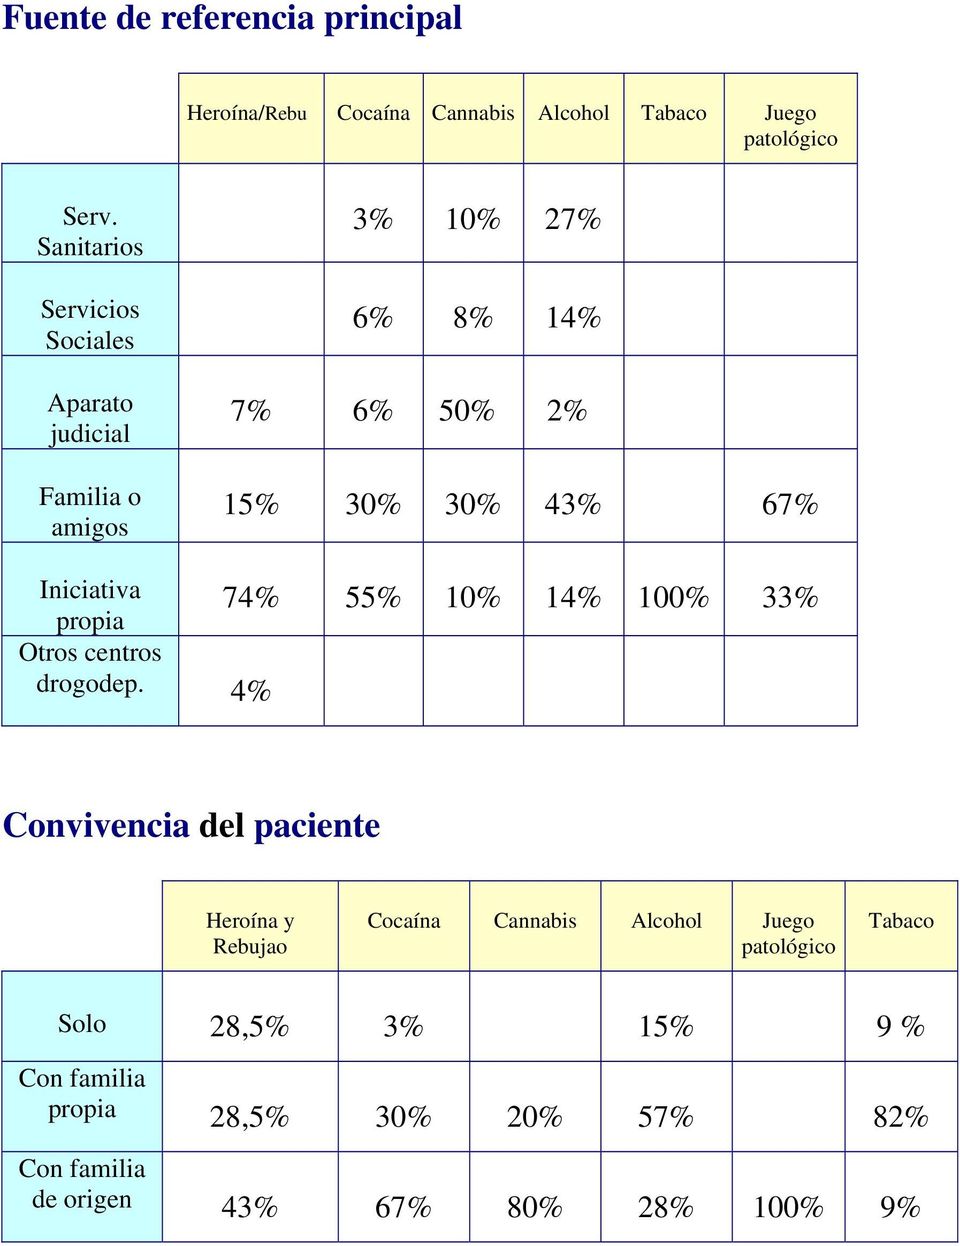 Iniciativa propia 74% 55% 10% 14% 100% 33% Otros centros drogodep.